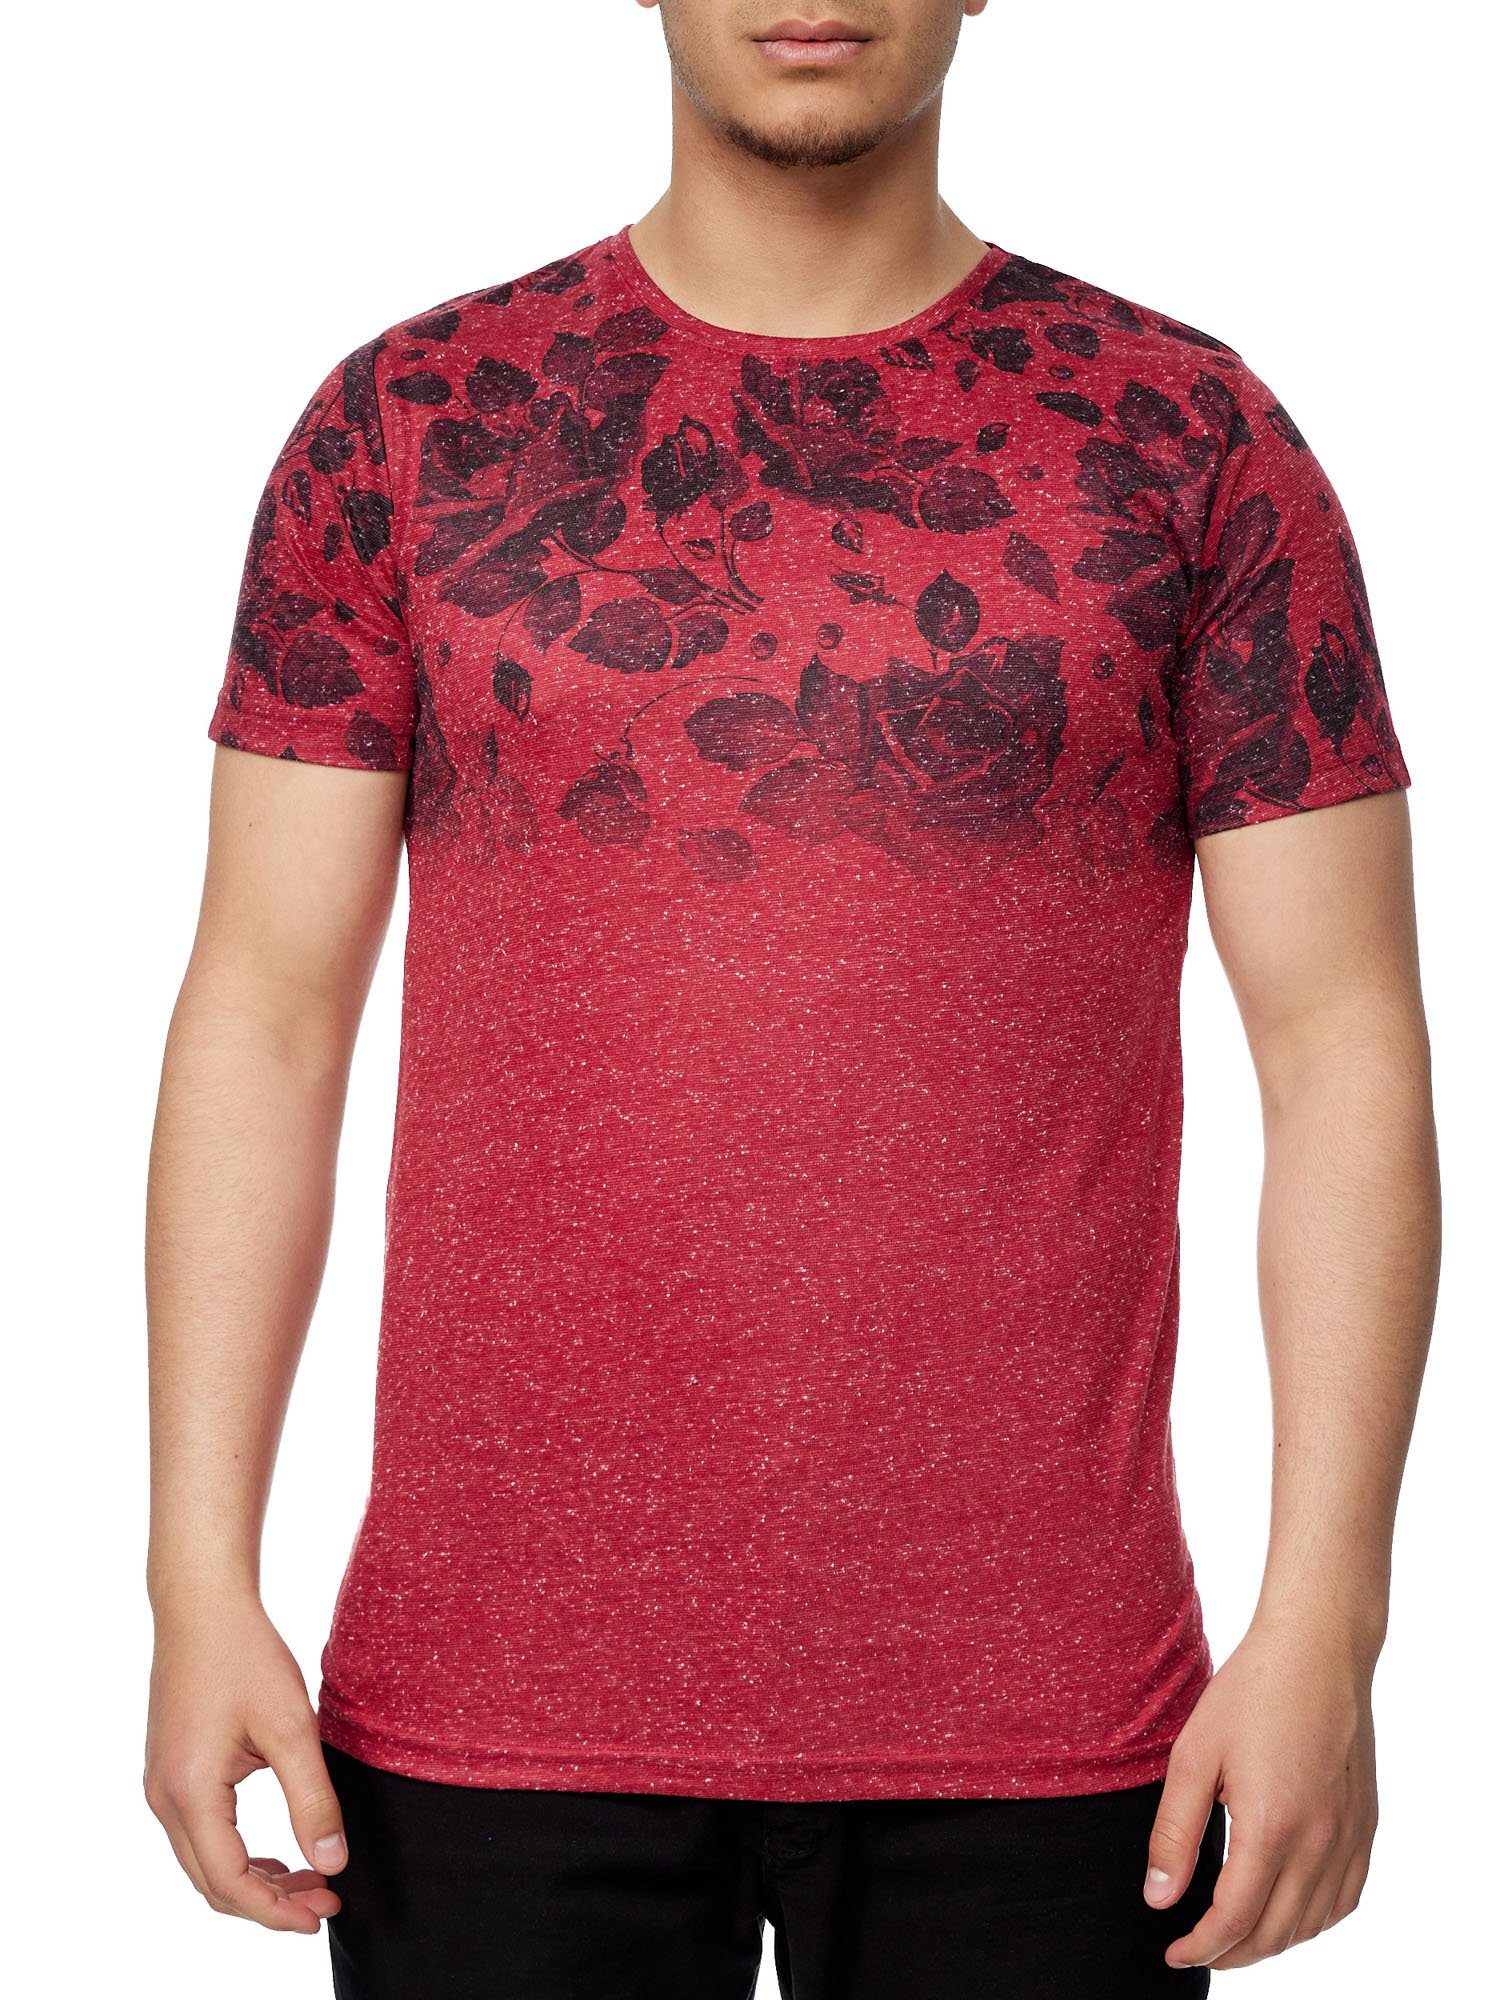 John Kayna T-Shirt John Kayna T Shirt Herren Tshirt Tee T-Shirt für (im modischem Design) Fitness Freizeit Casual Rot